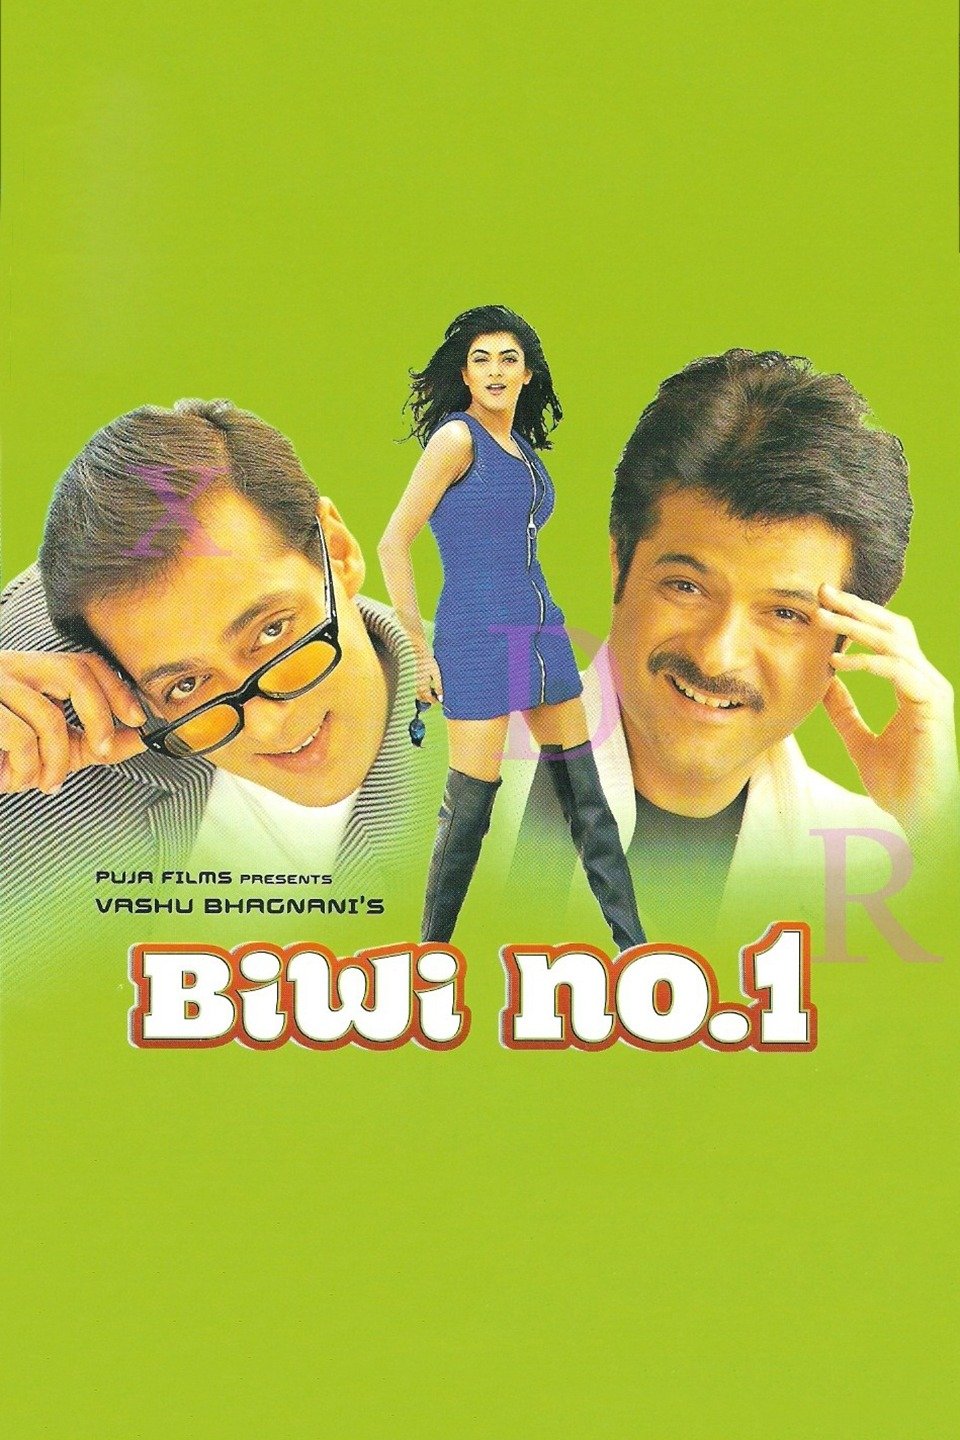 biwi no 1 songs download mp3